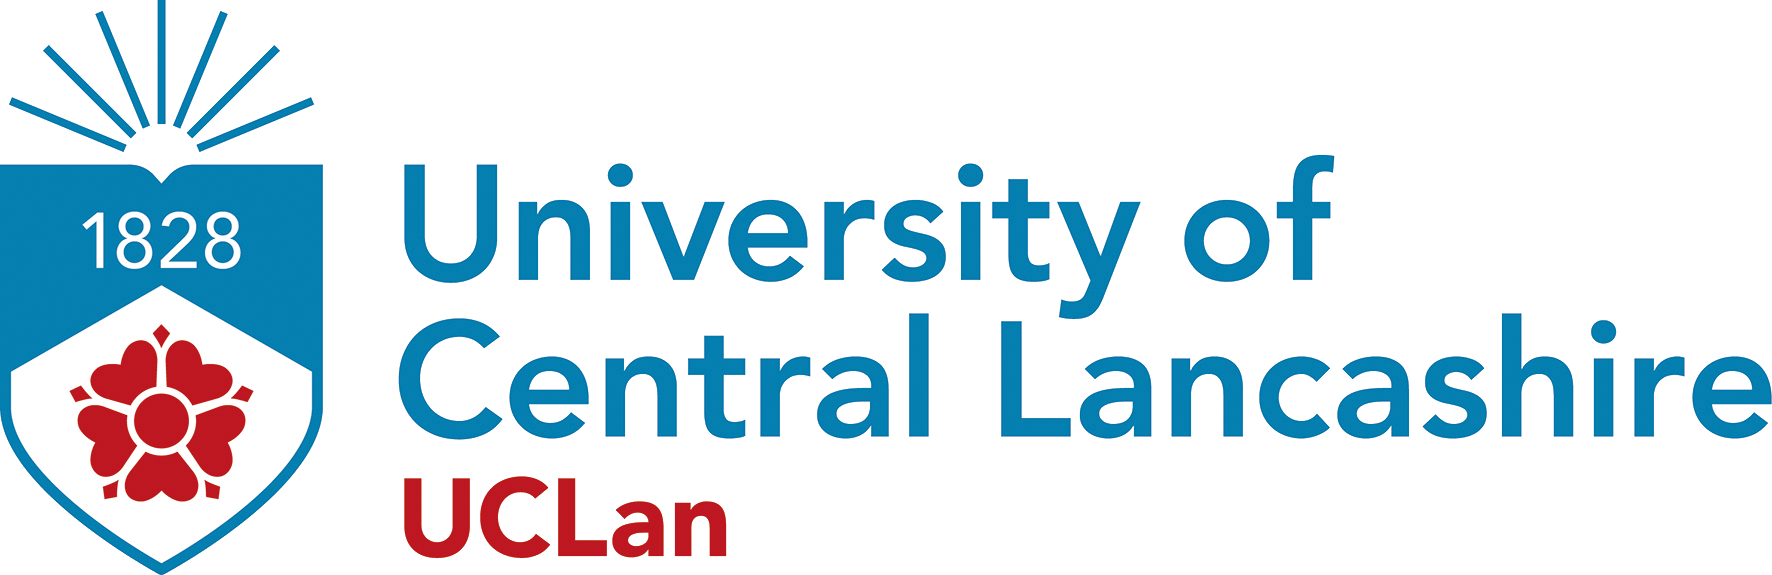 UCLan-Primary-logo-print-003